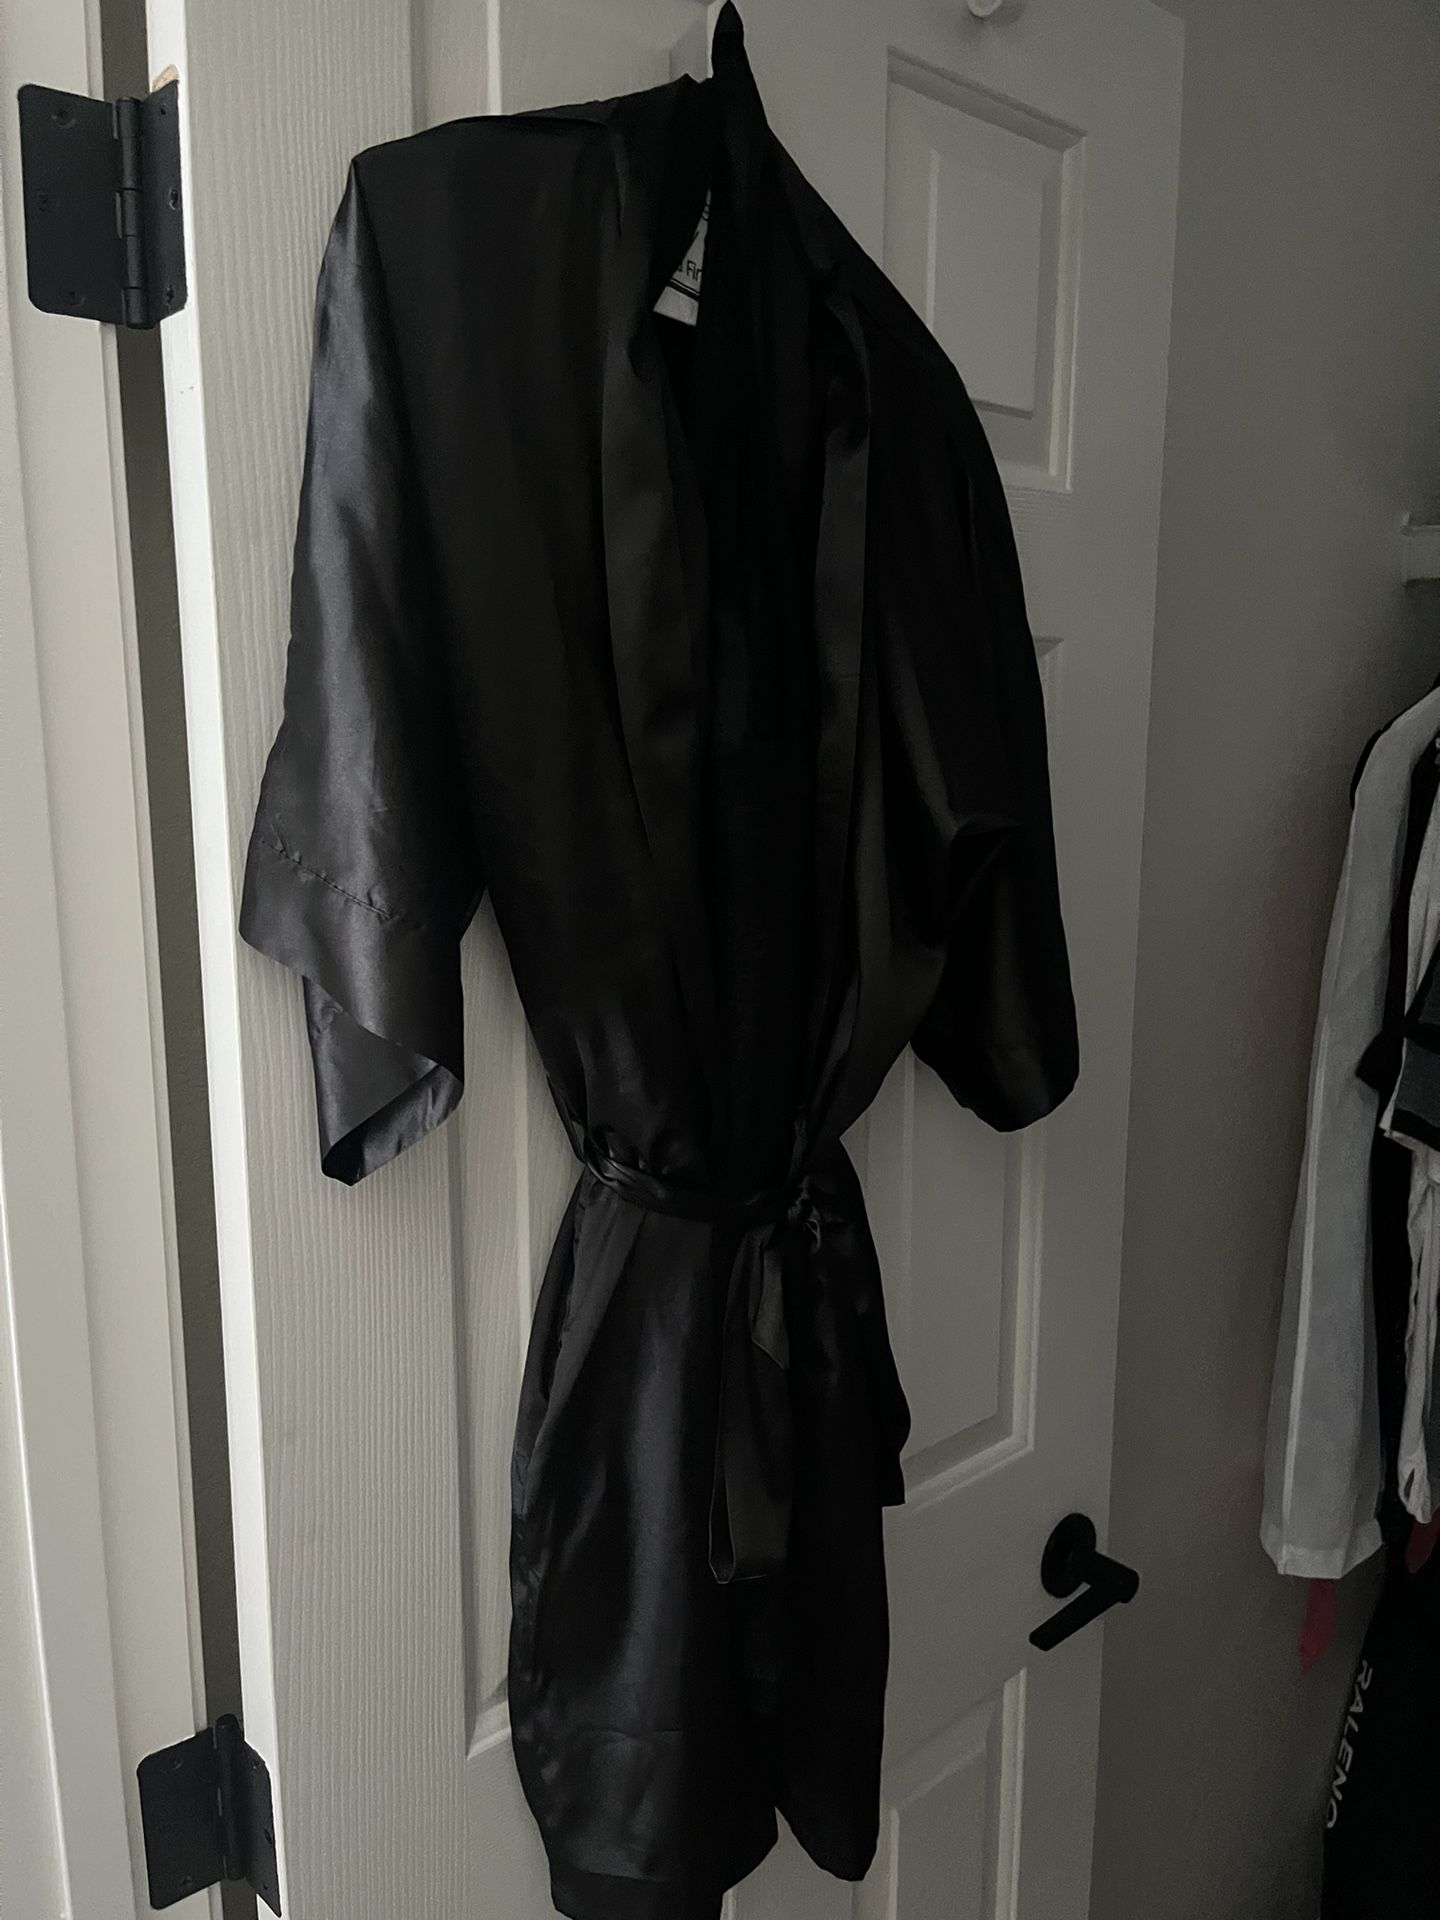 Black Satin Victoria's Secret Robe Size Small/ Medium 